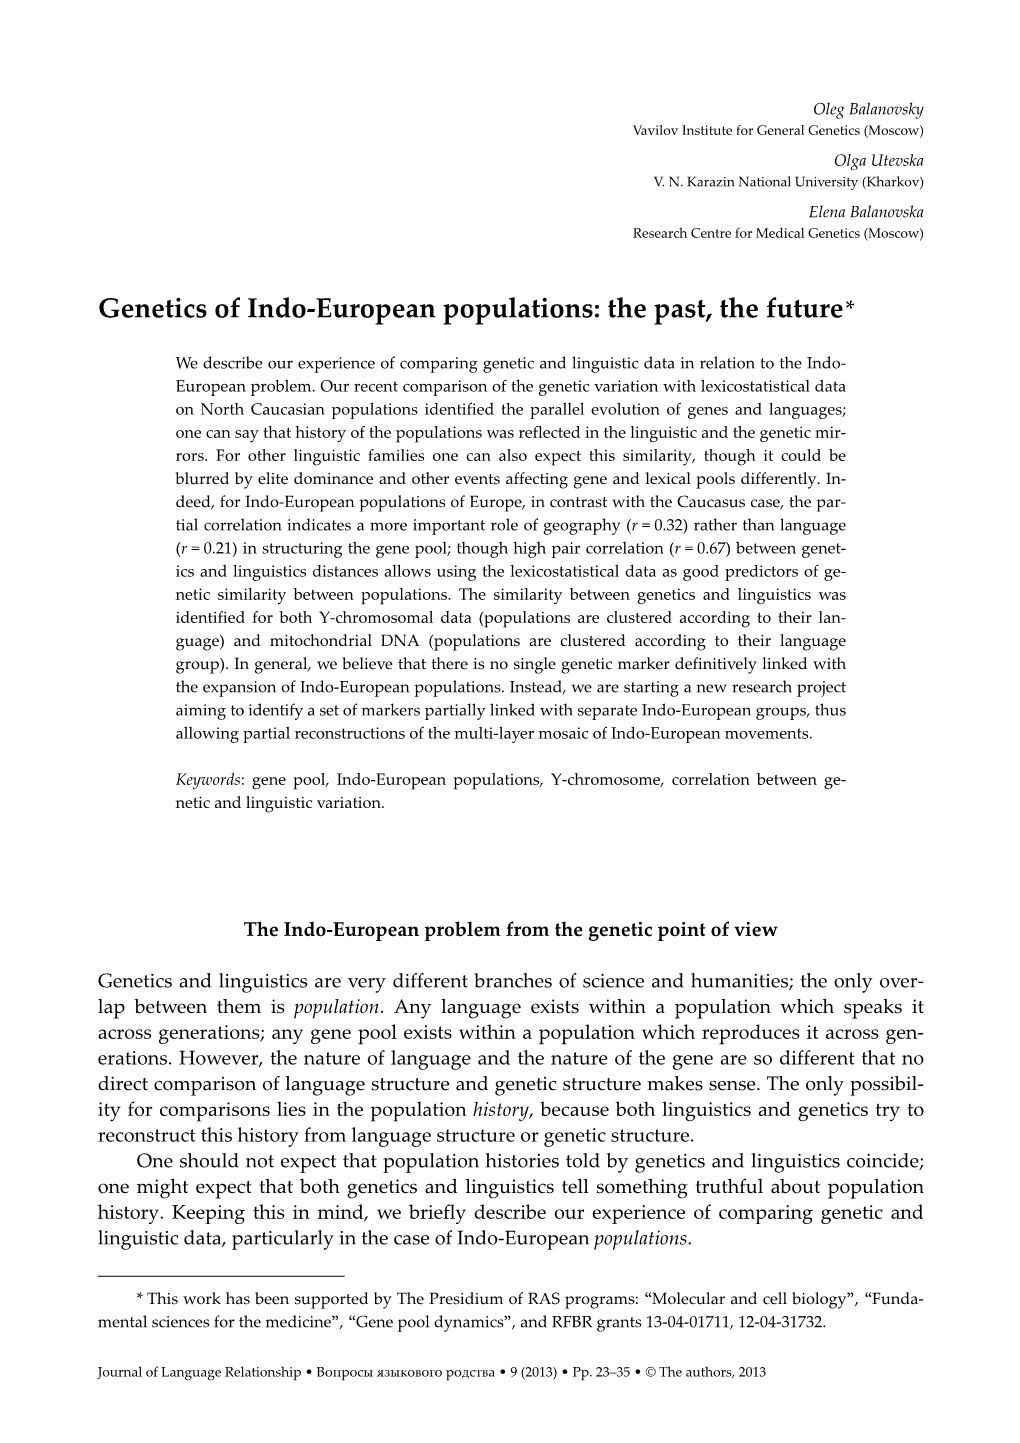 Genetics of Indo-European Populations: the Past, the Future *